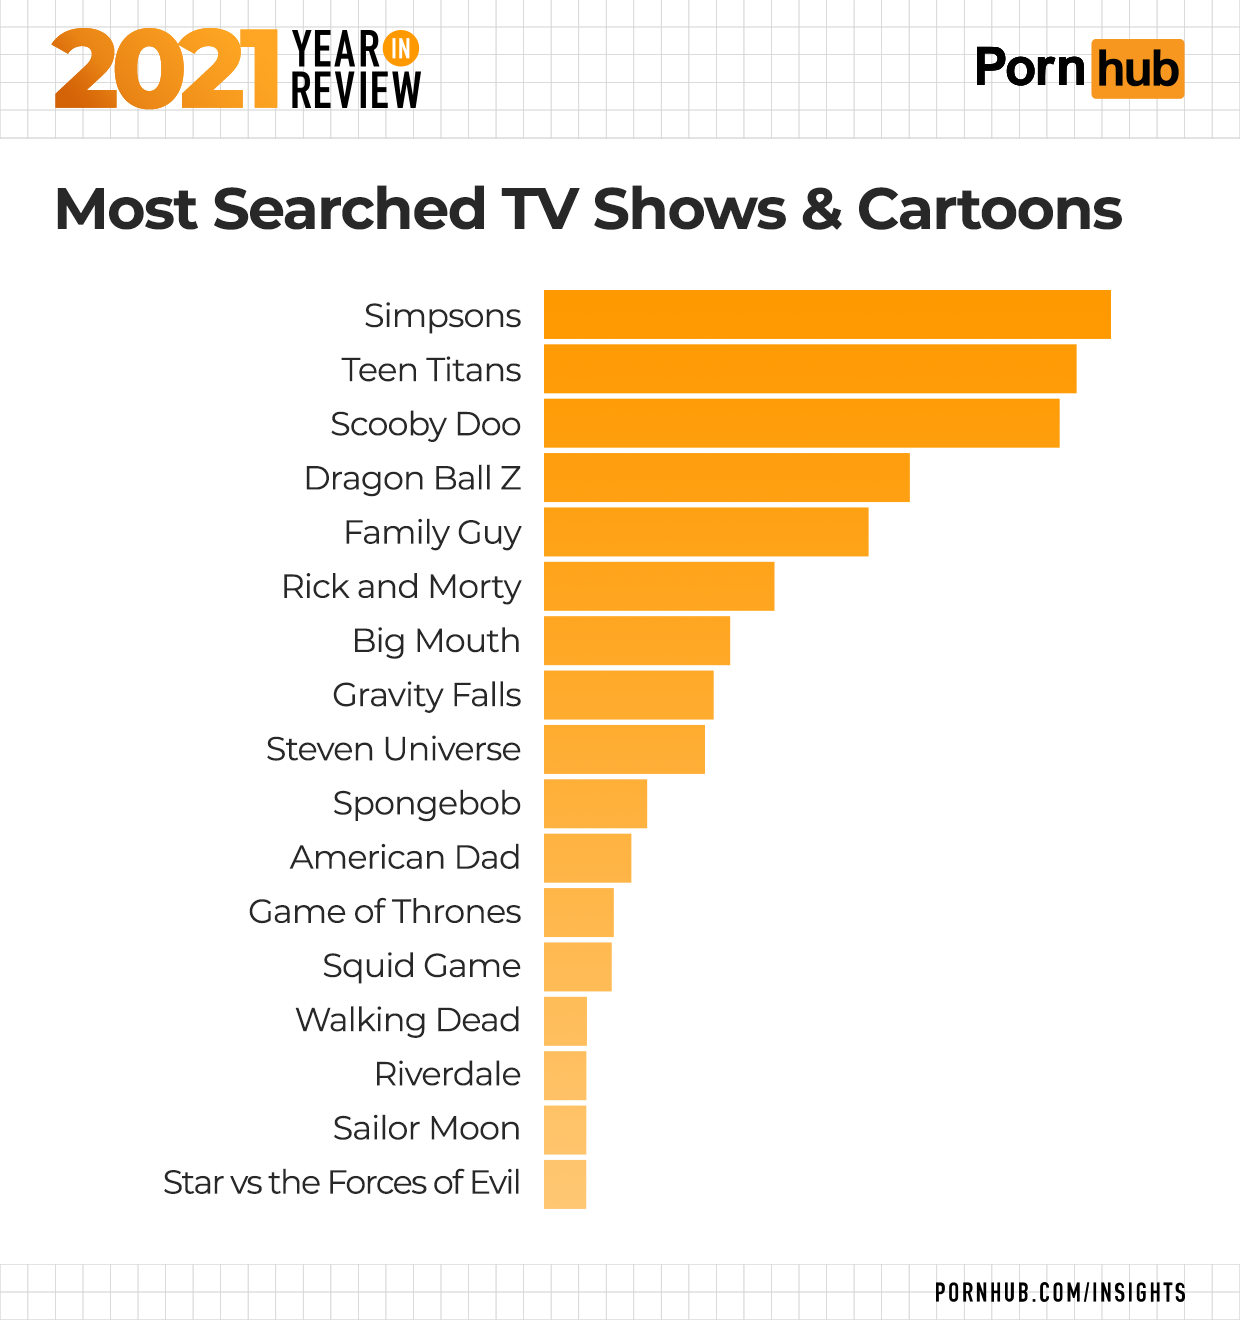 Porn hub shows